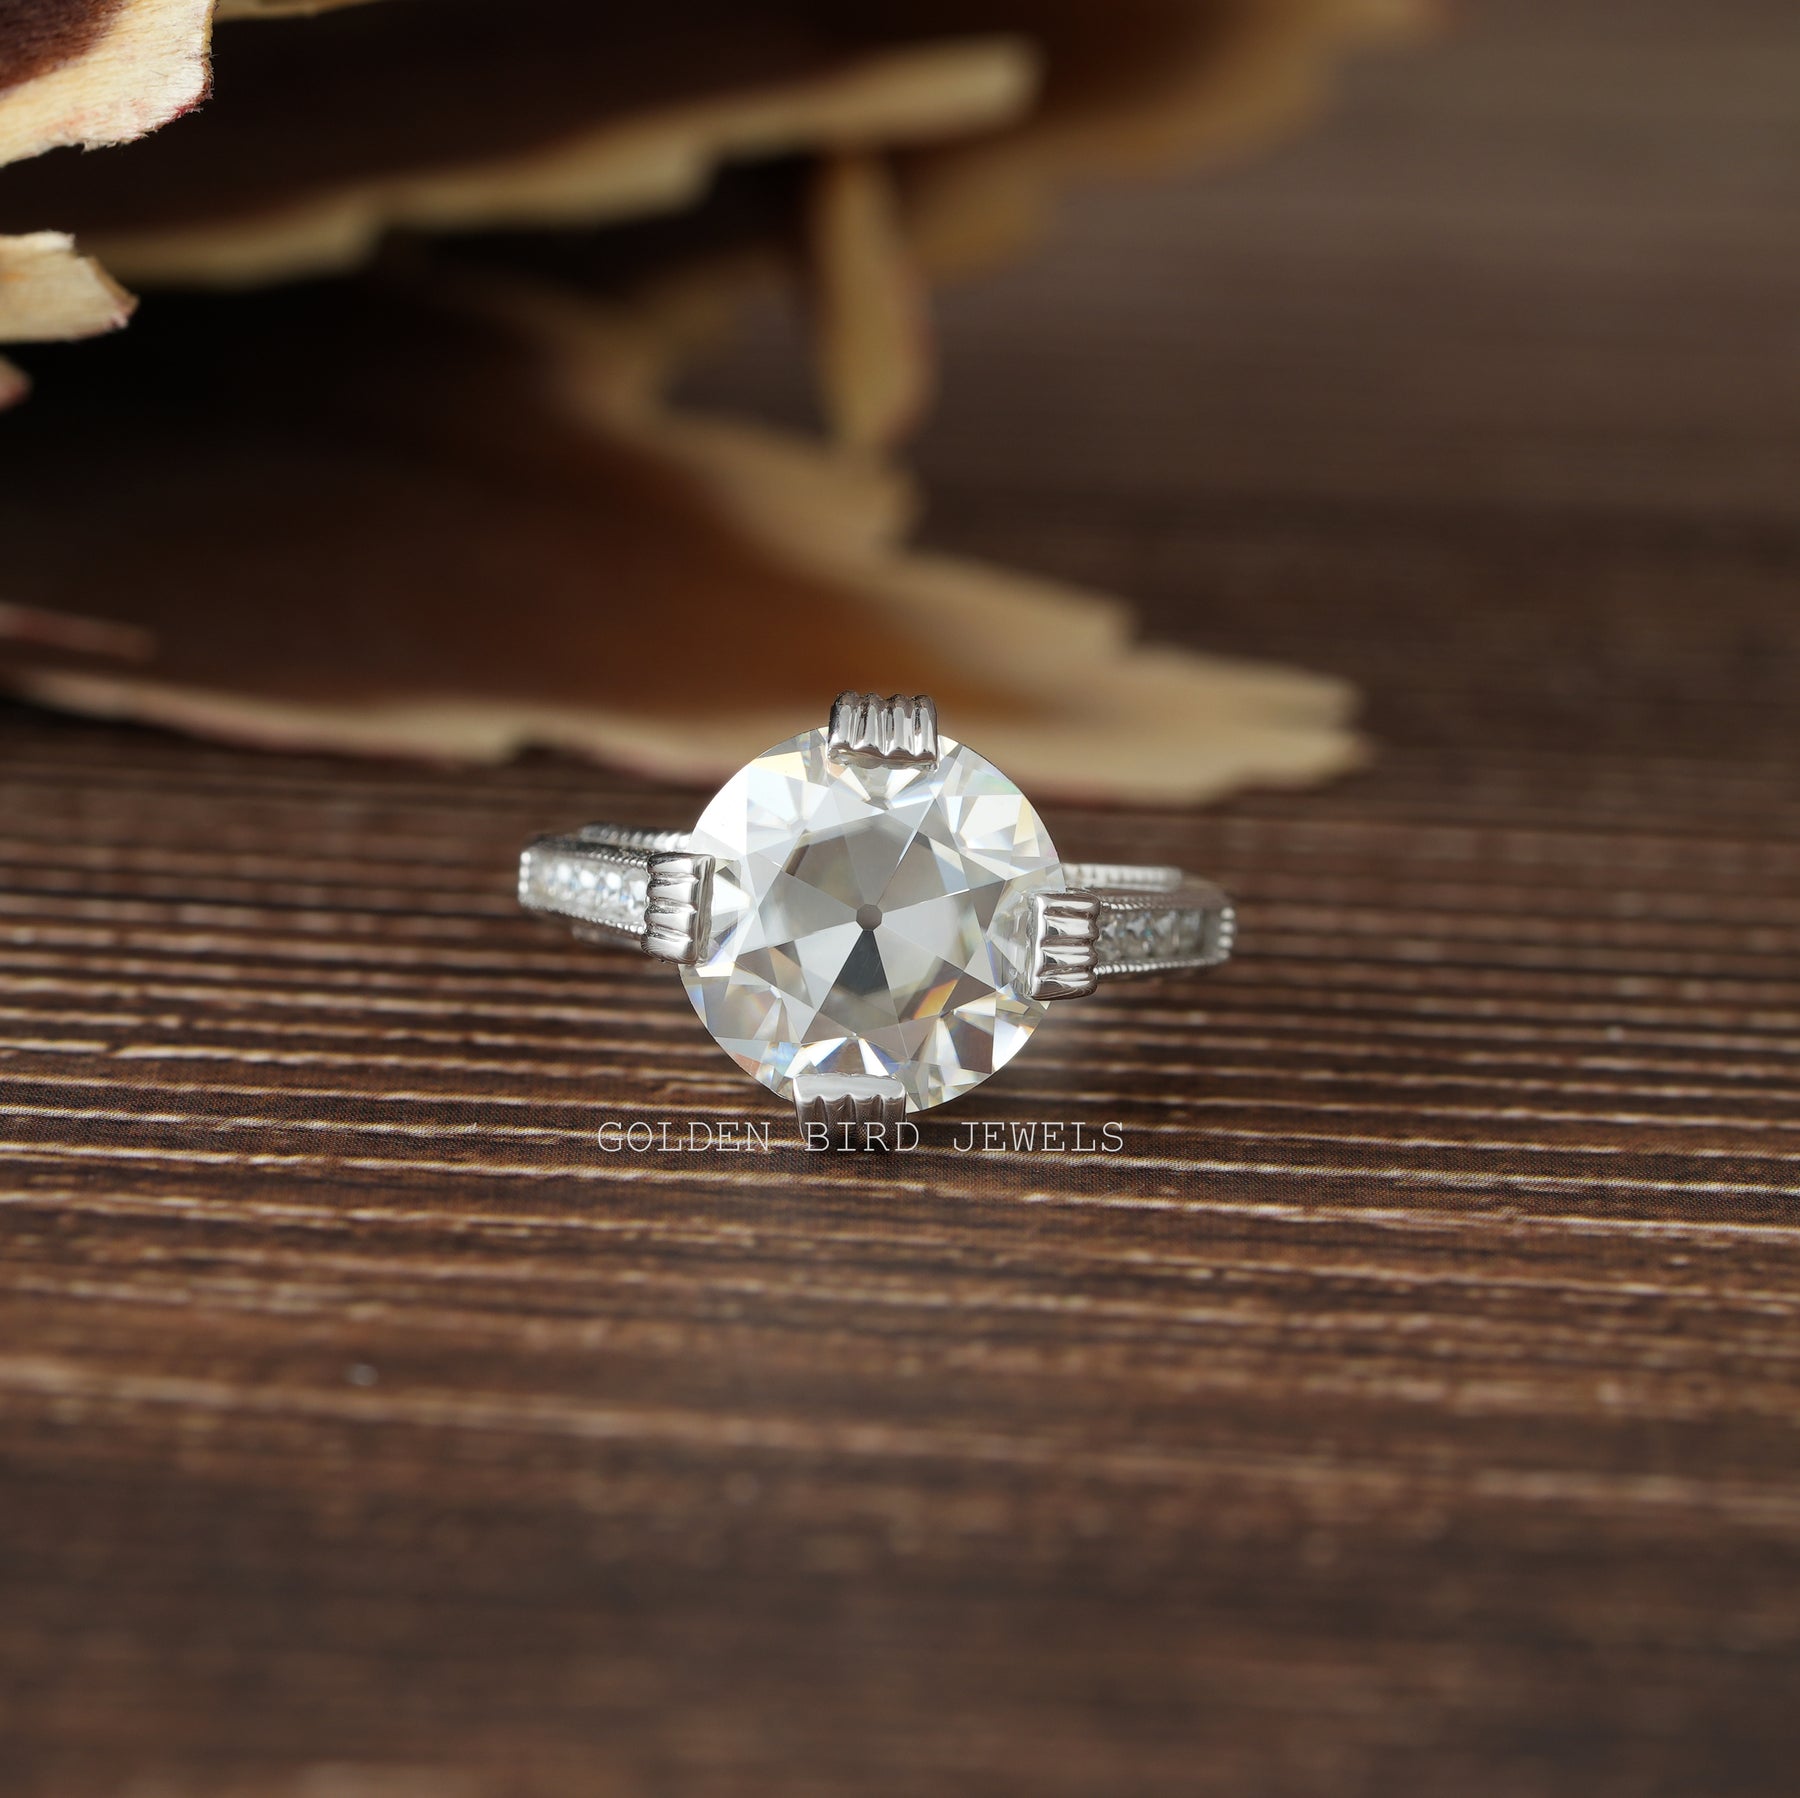 [Moissanite OEC Round Cut Vintage Engagement Ring In 14K White Gold]-[Golden Bird Jewels]